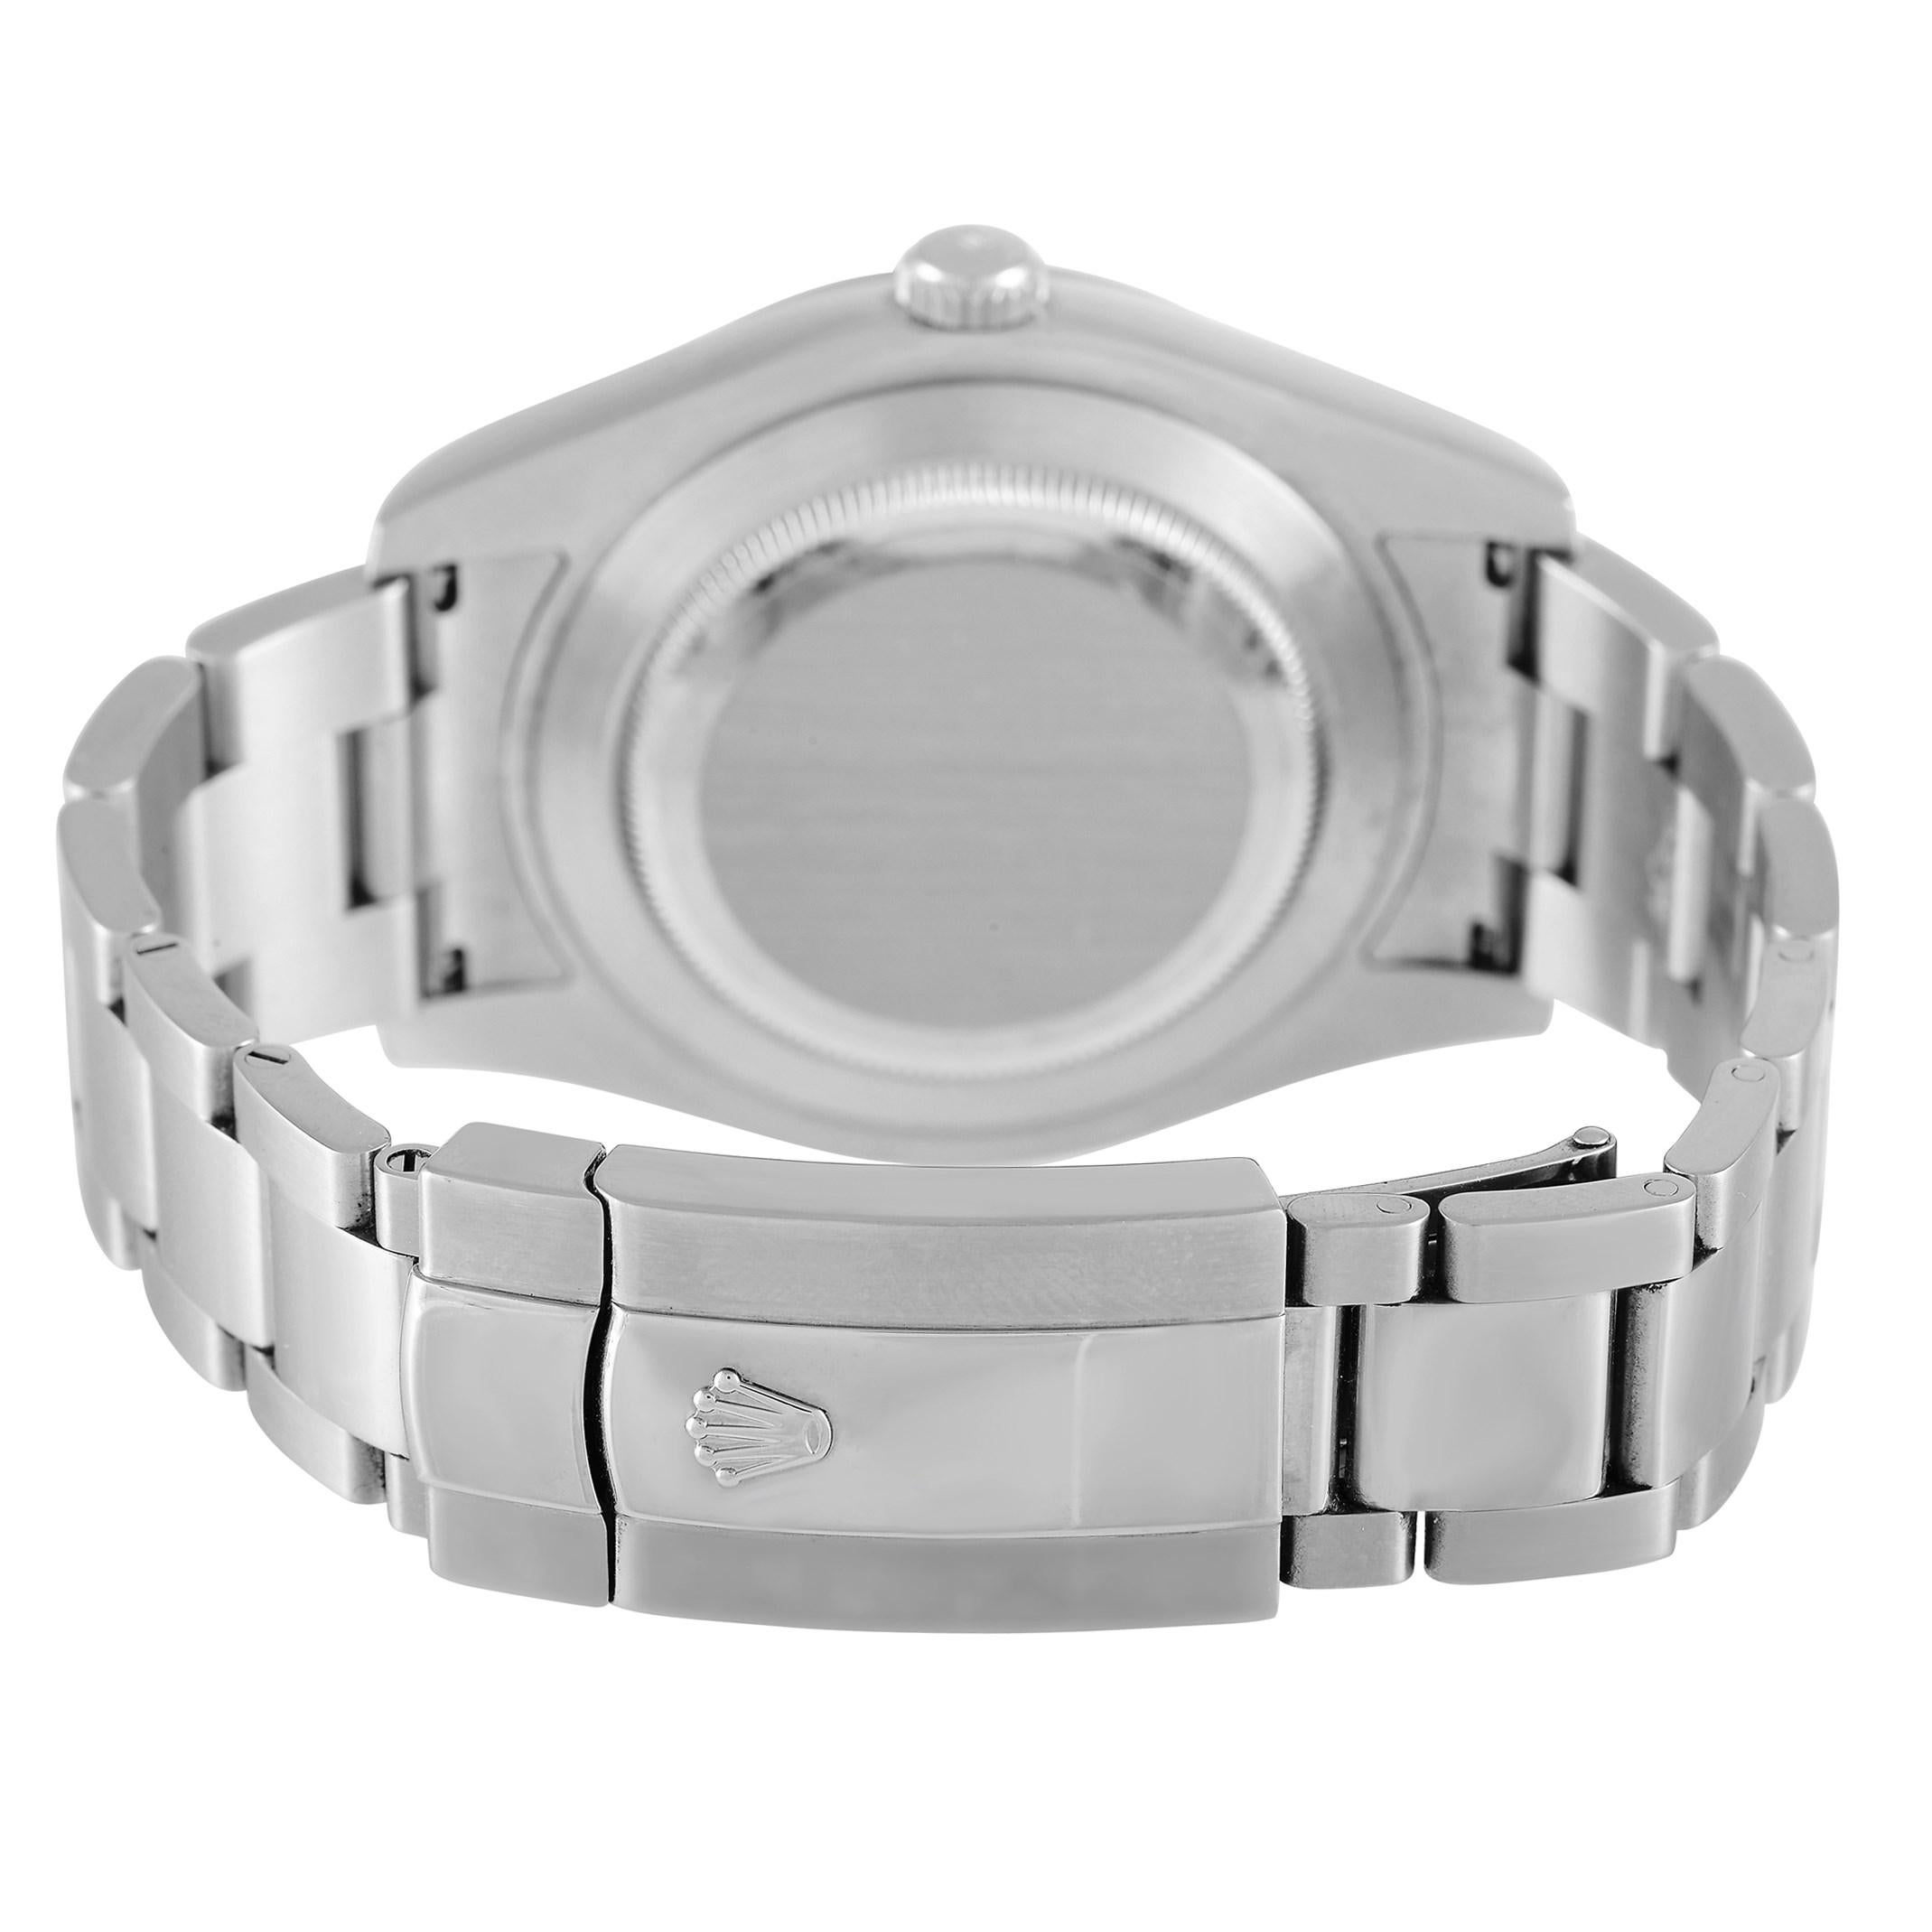 Men's Rolex Oyster Perpetual Datejust II Watch 116334